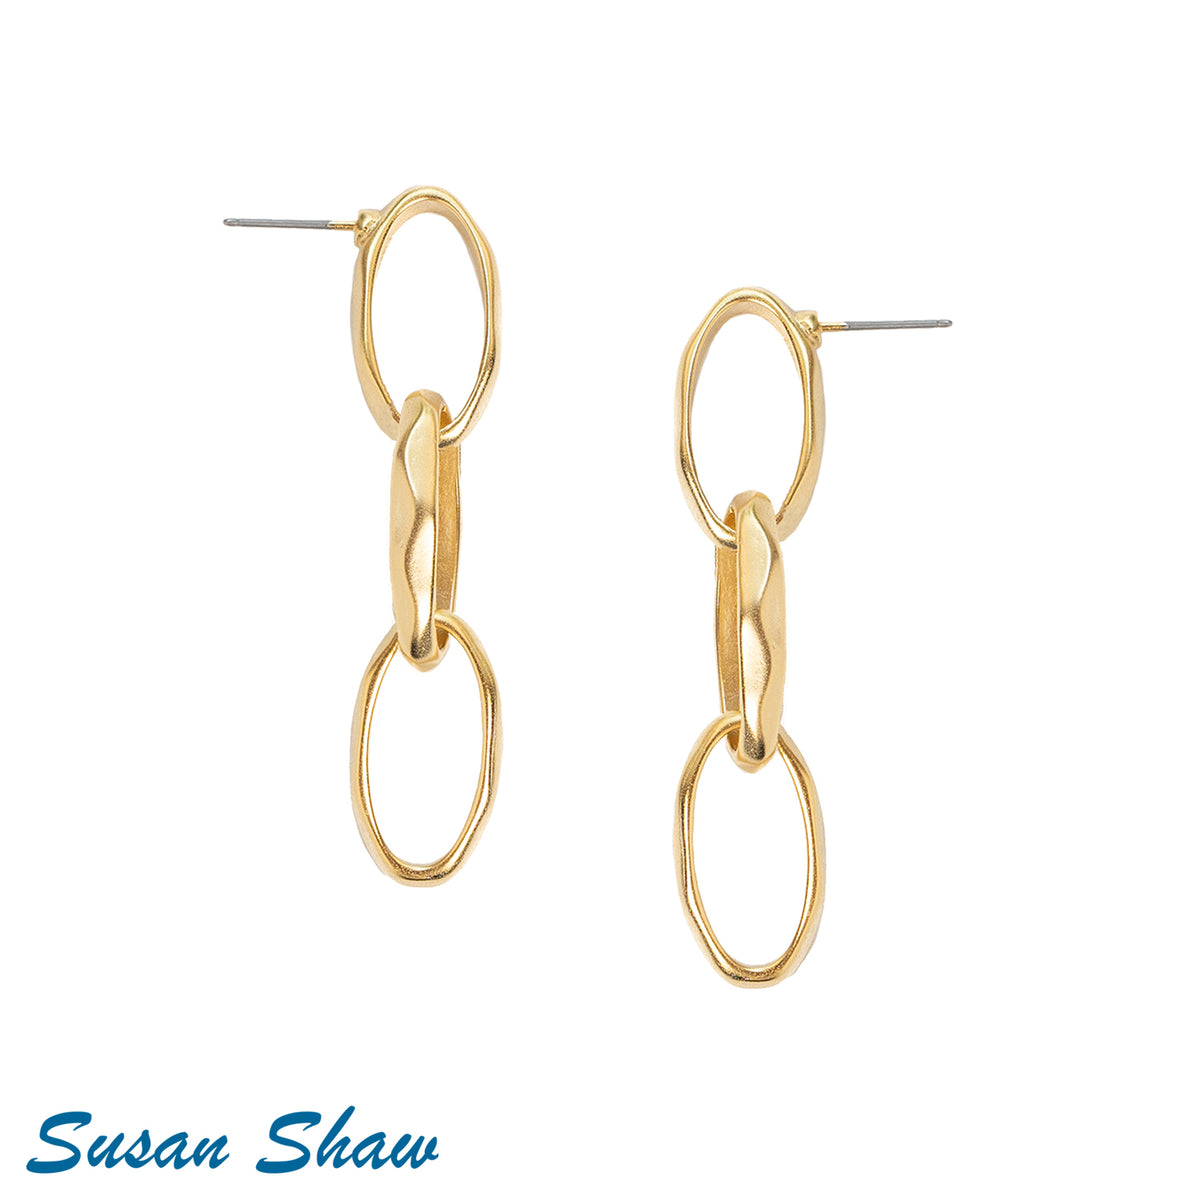 Handcast Gold Chain Earrings